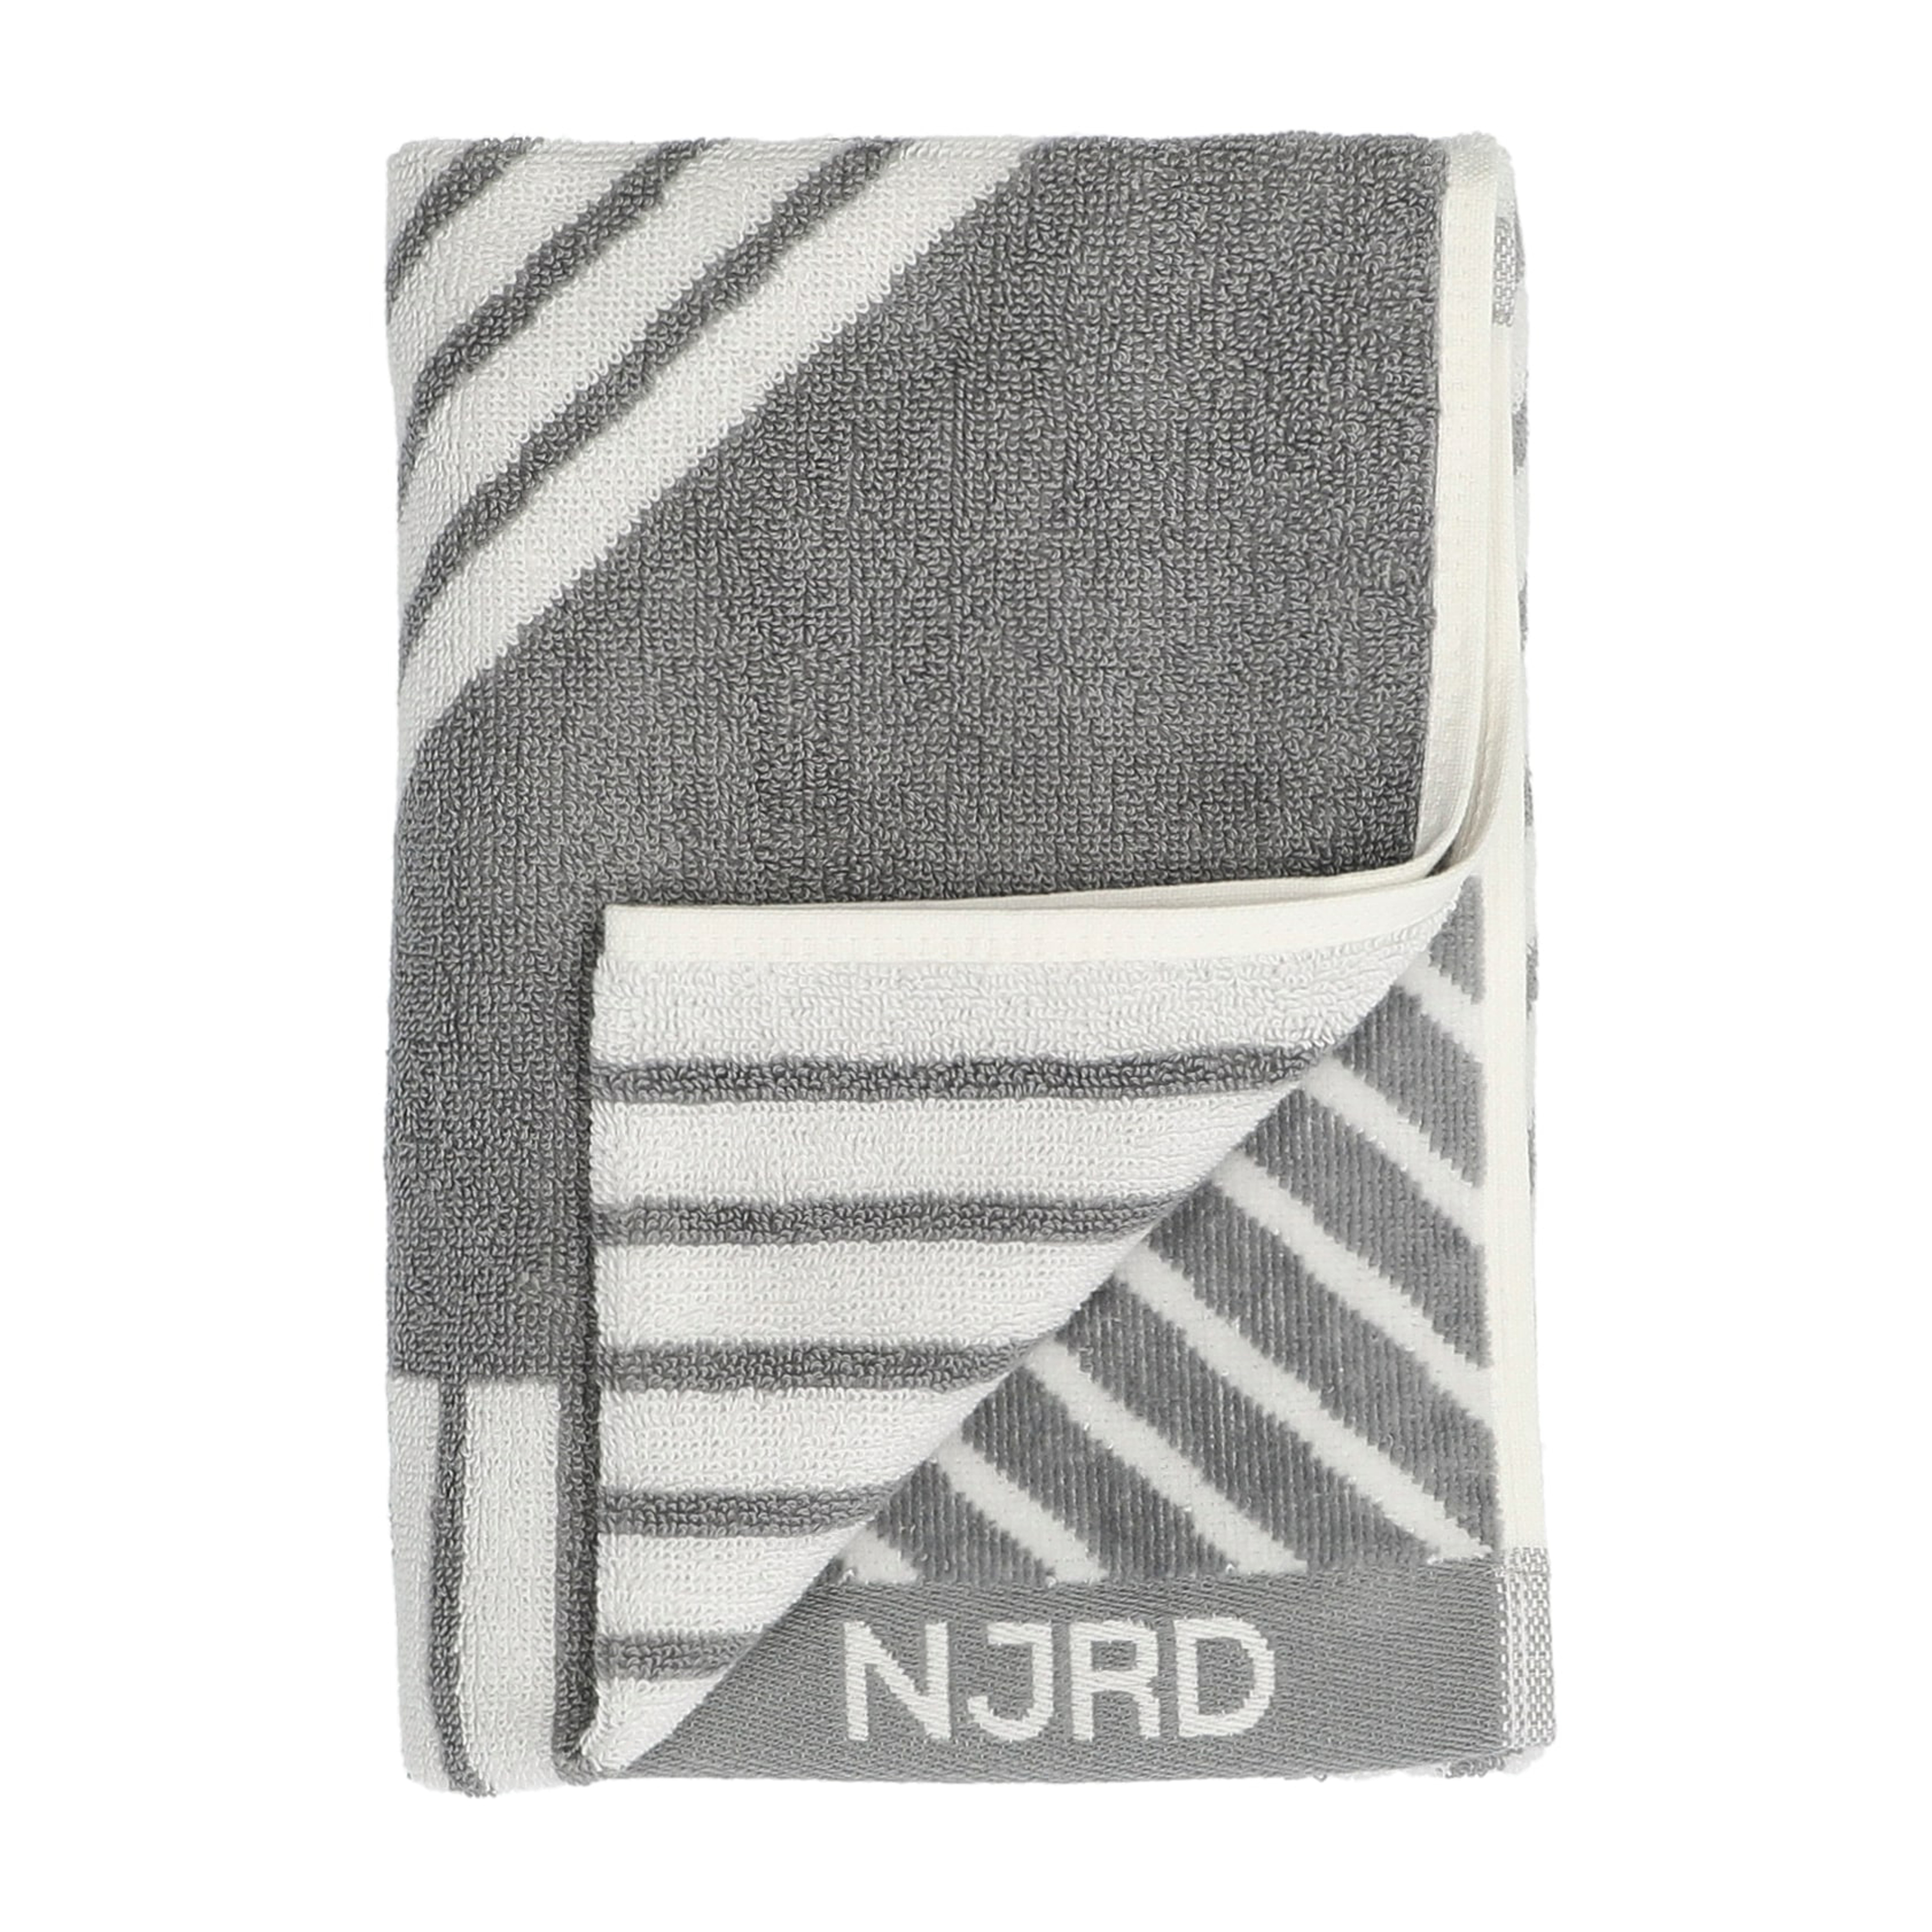 https://www.nordicnest.com/assets/blobs/njrd-stripes-towel-50x70-cm-grey/513387-01_1_ProductImageMain-0b2bc88361.jpeg